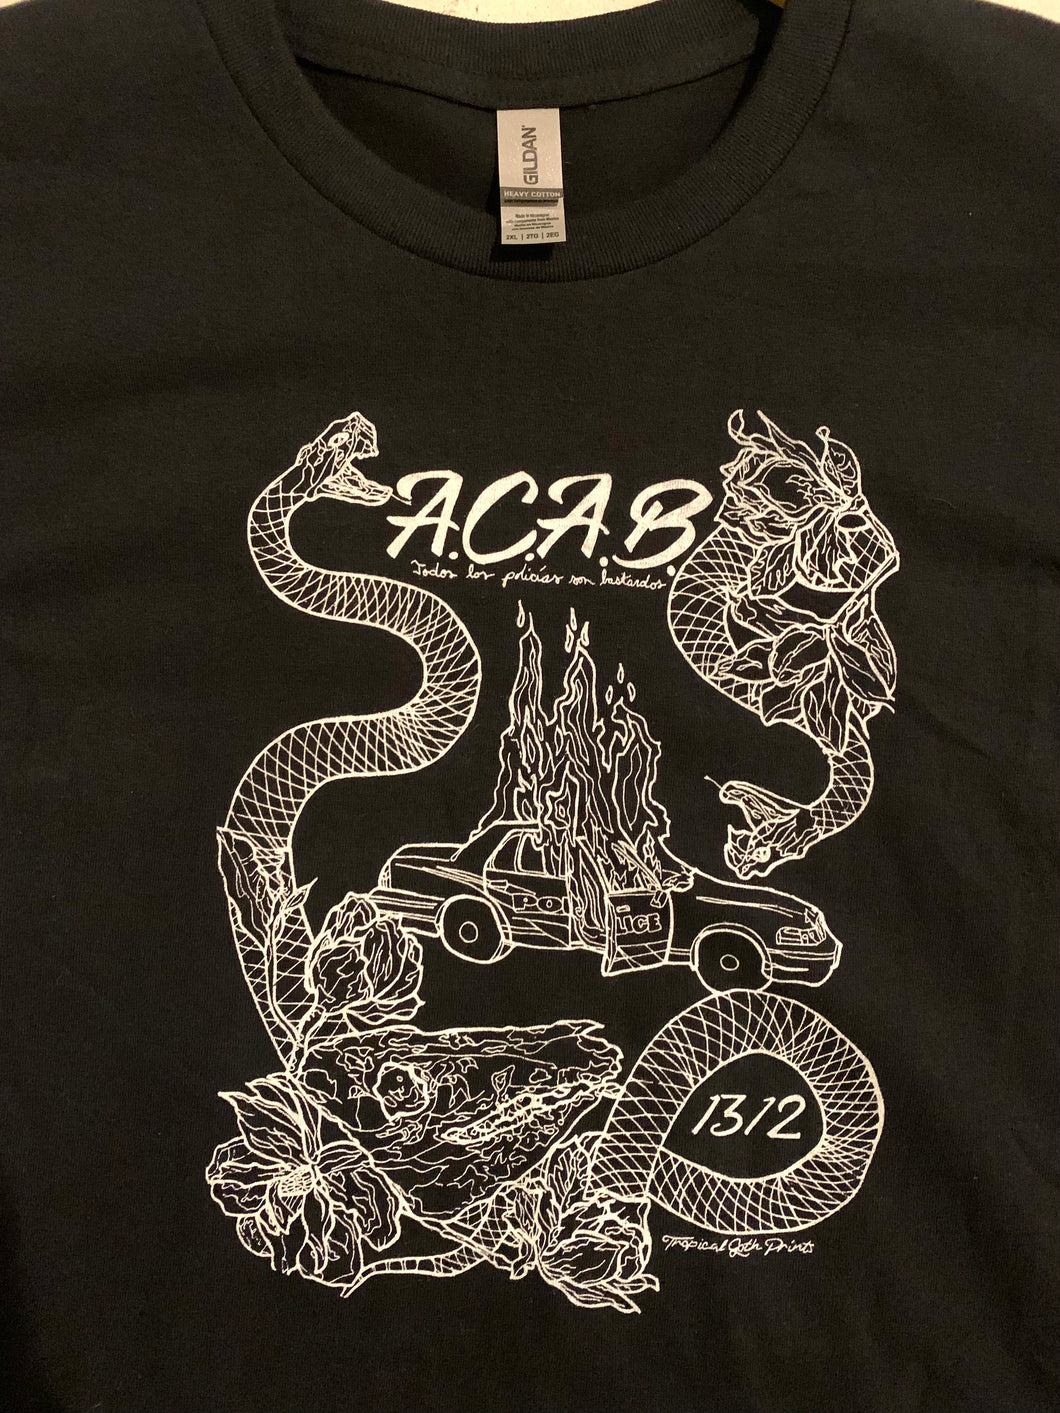 ACAB t-shirts by Tropical Goth Prints